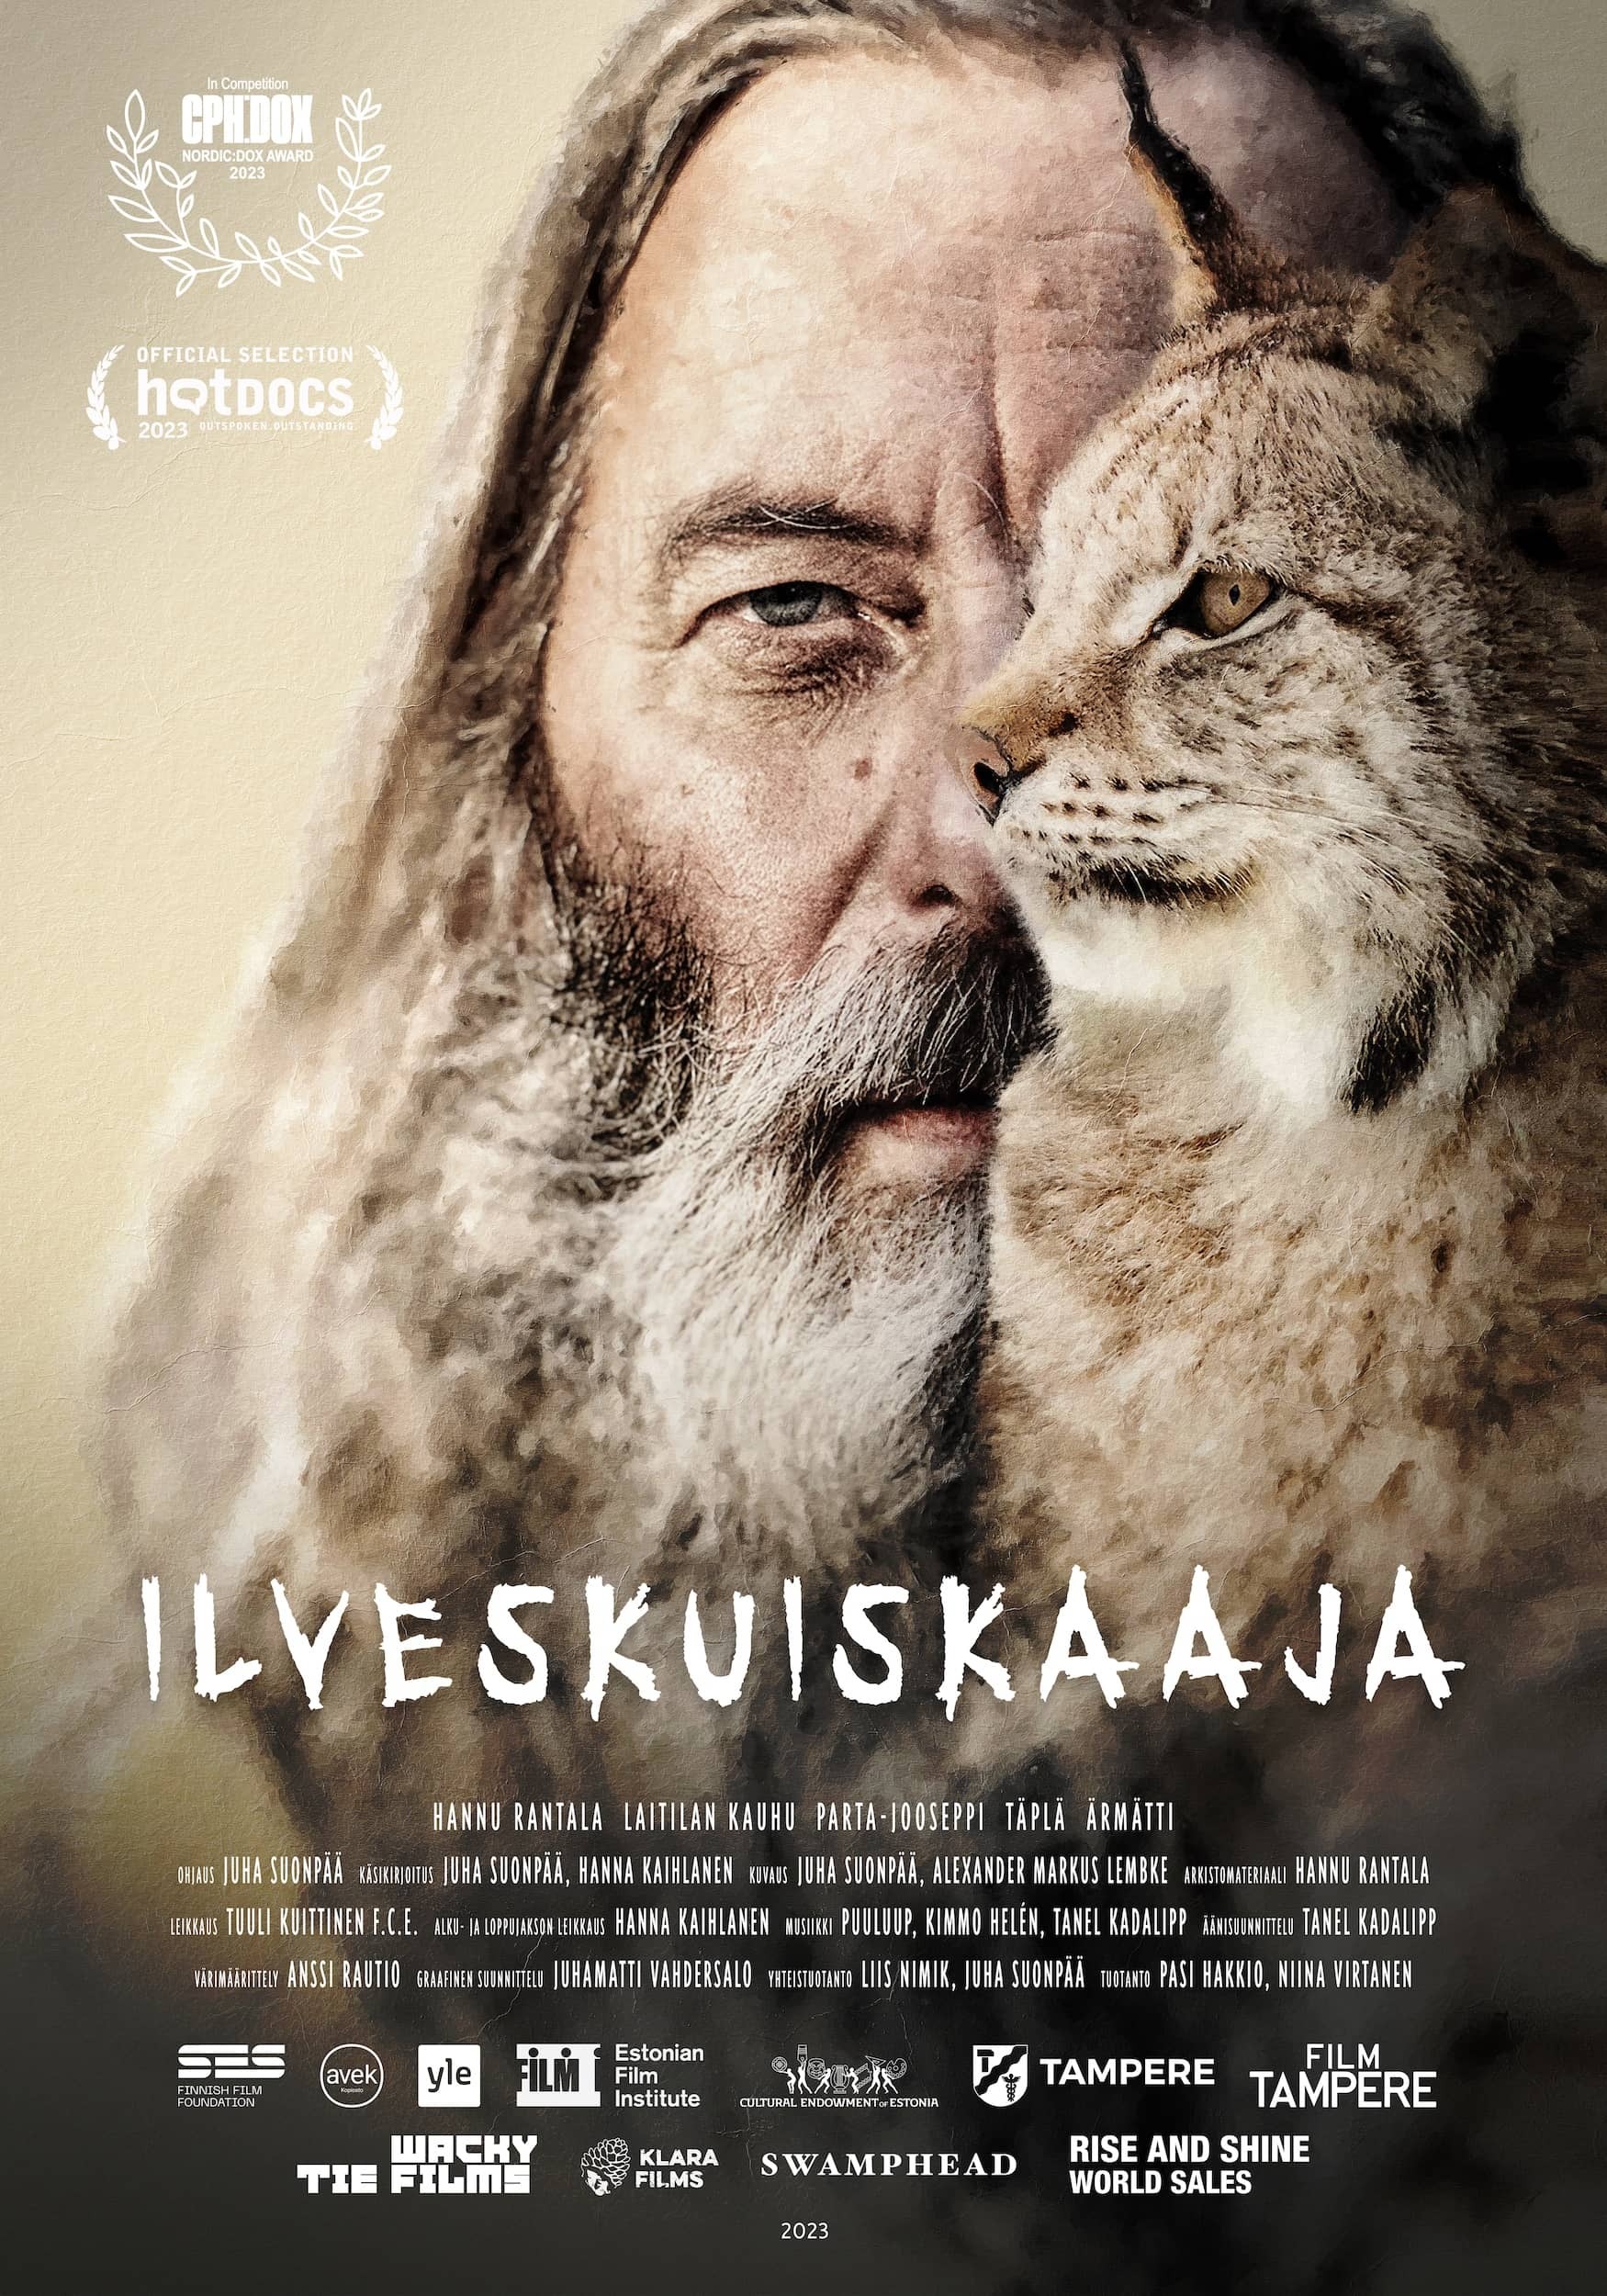 Mega Sized Movie Poster Image for Ilveskuiskaaja 